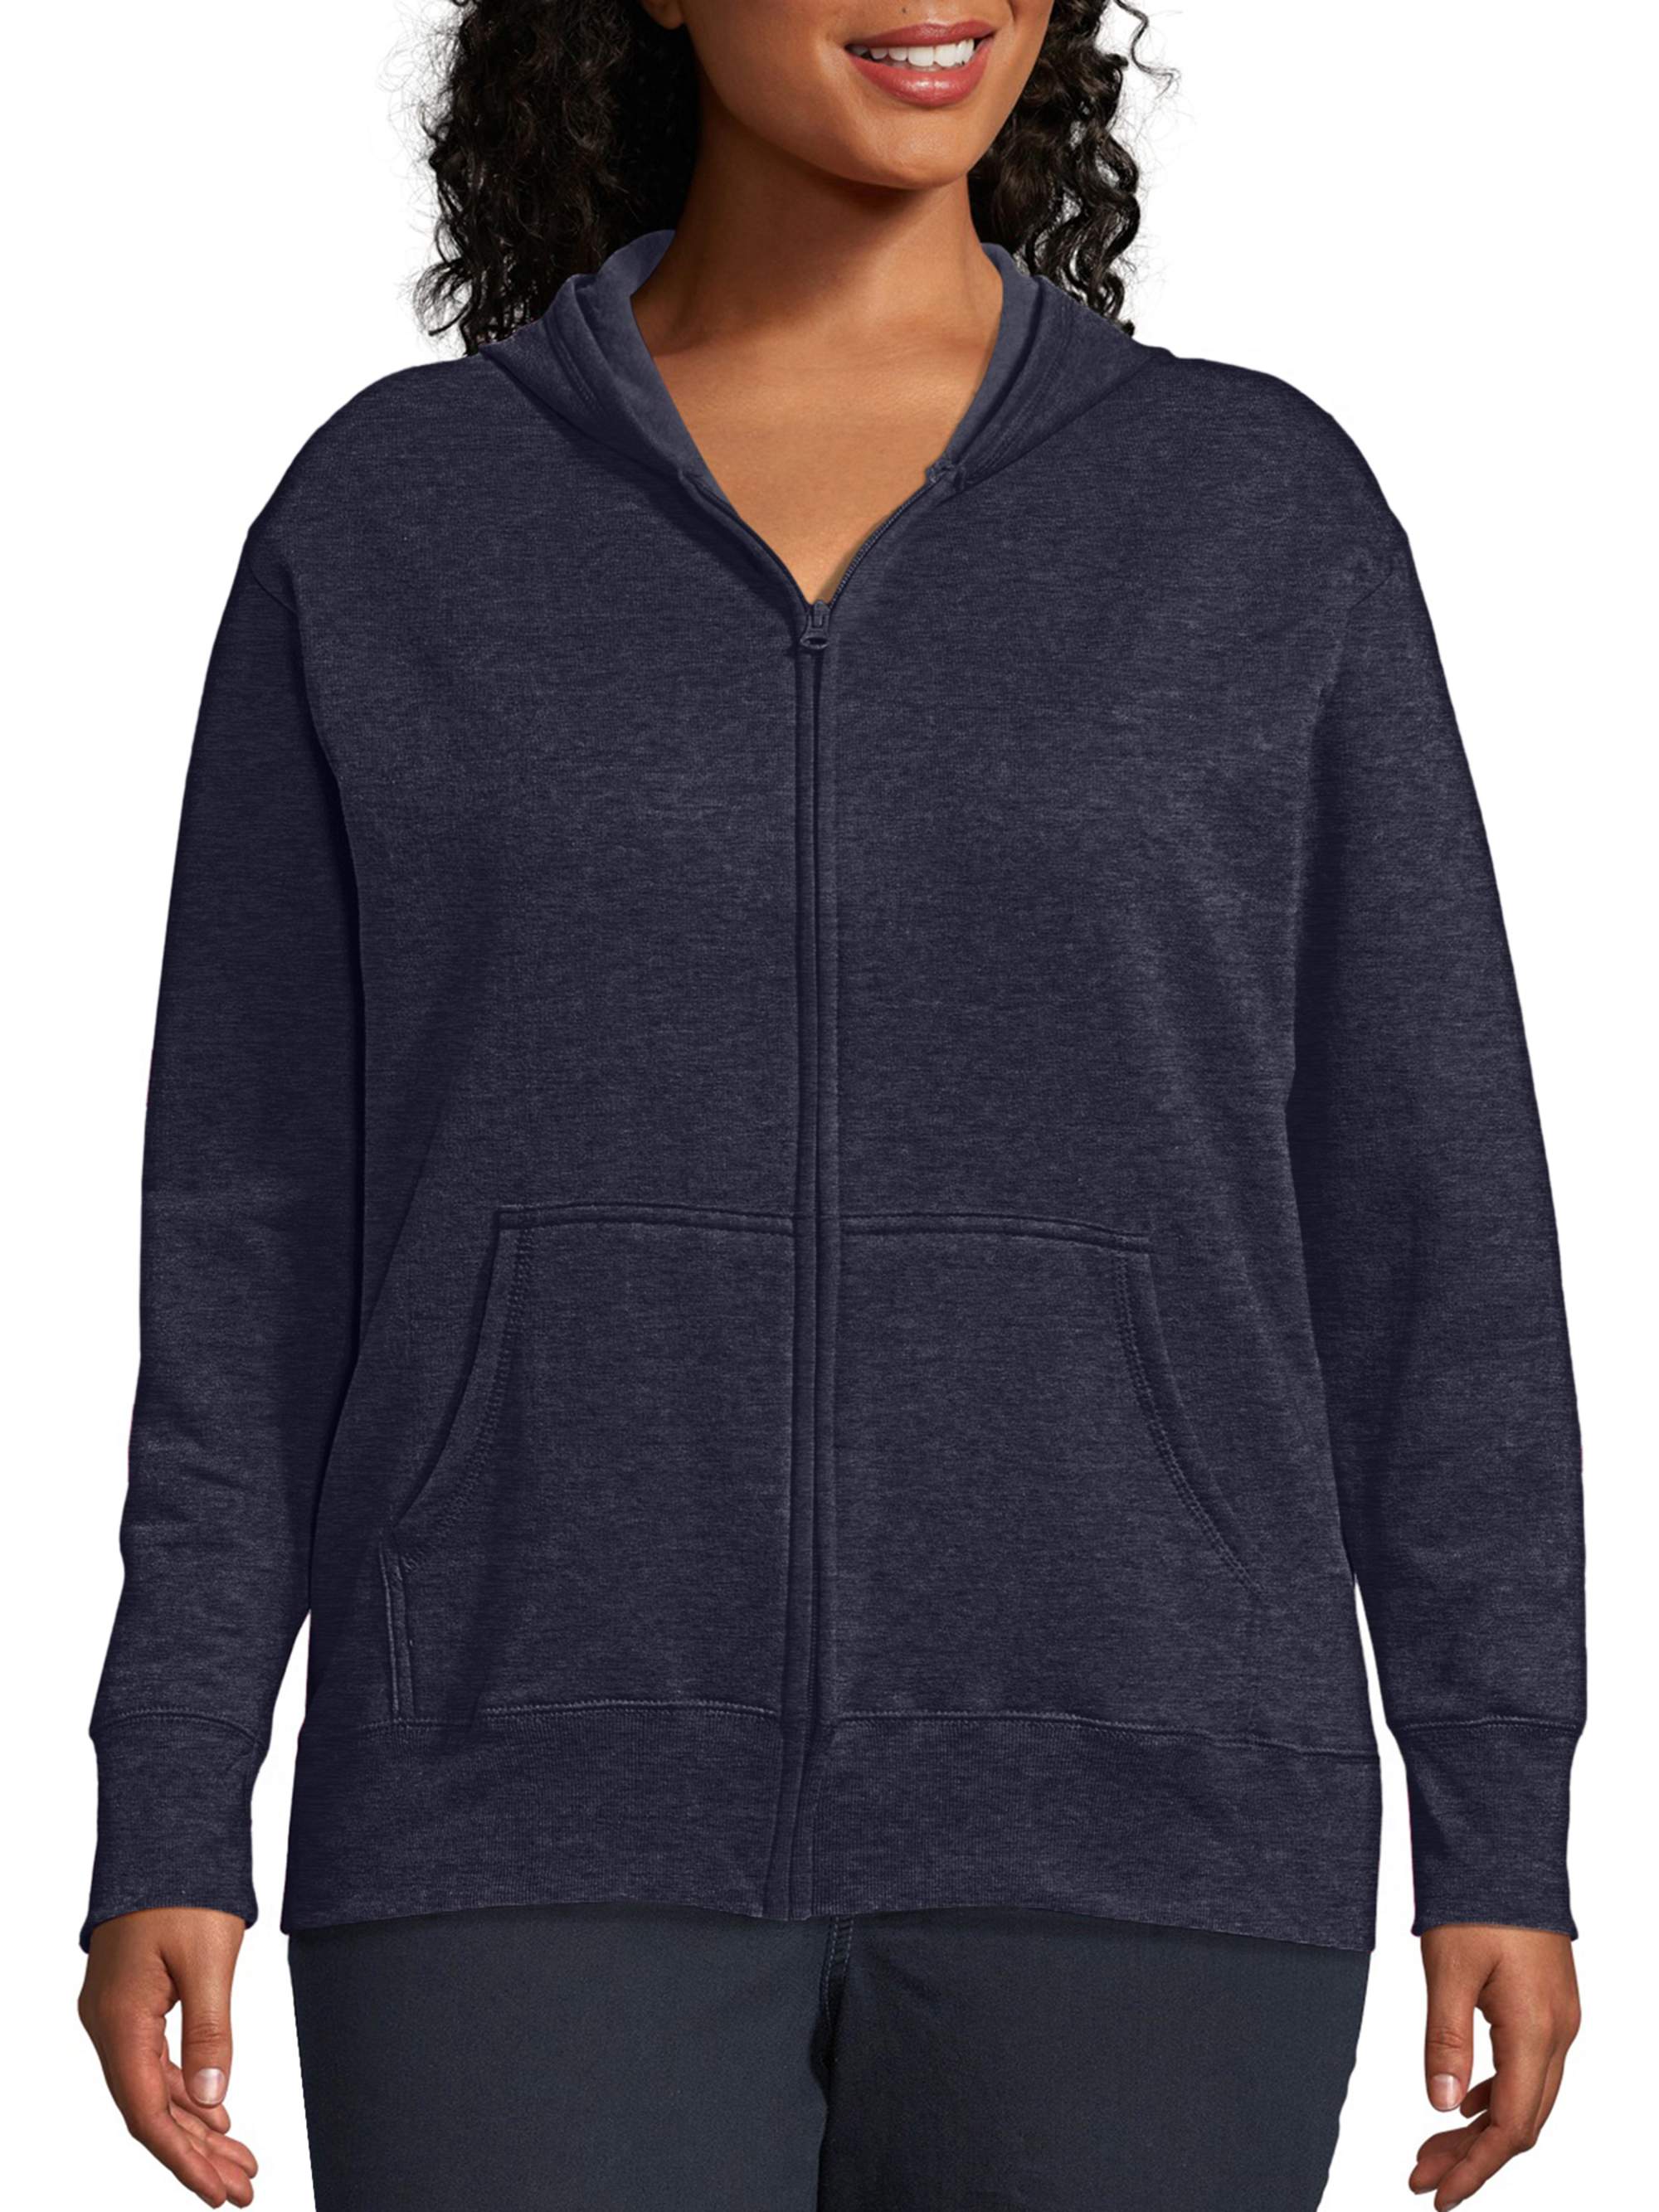 JMS by Hanes Women's Plus Size Fleece Zip Hood Jacket - image 1 of 6